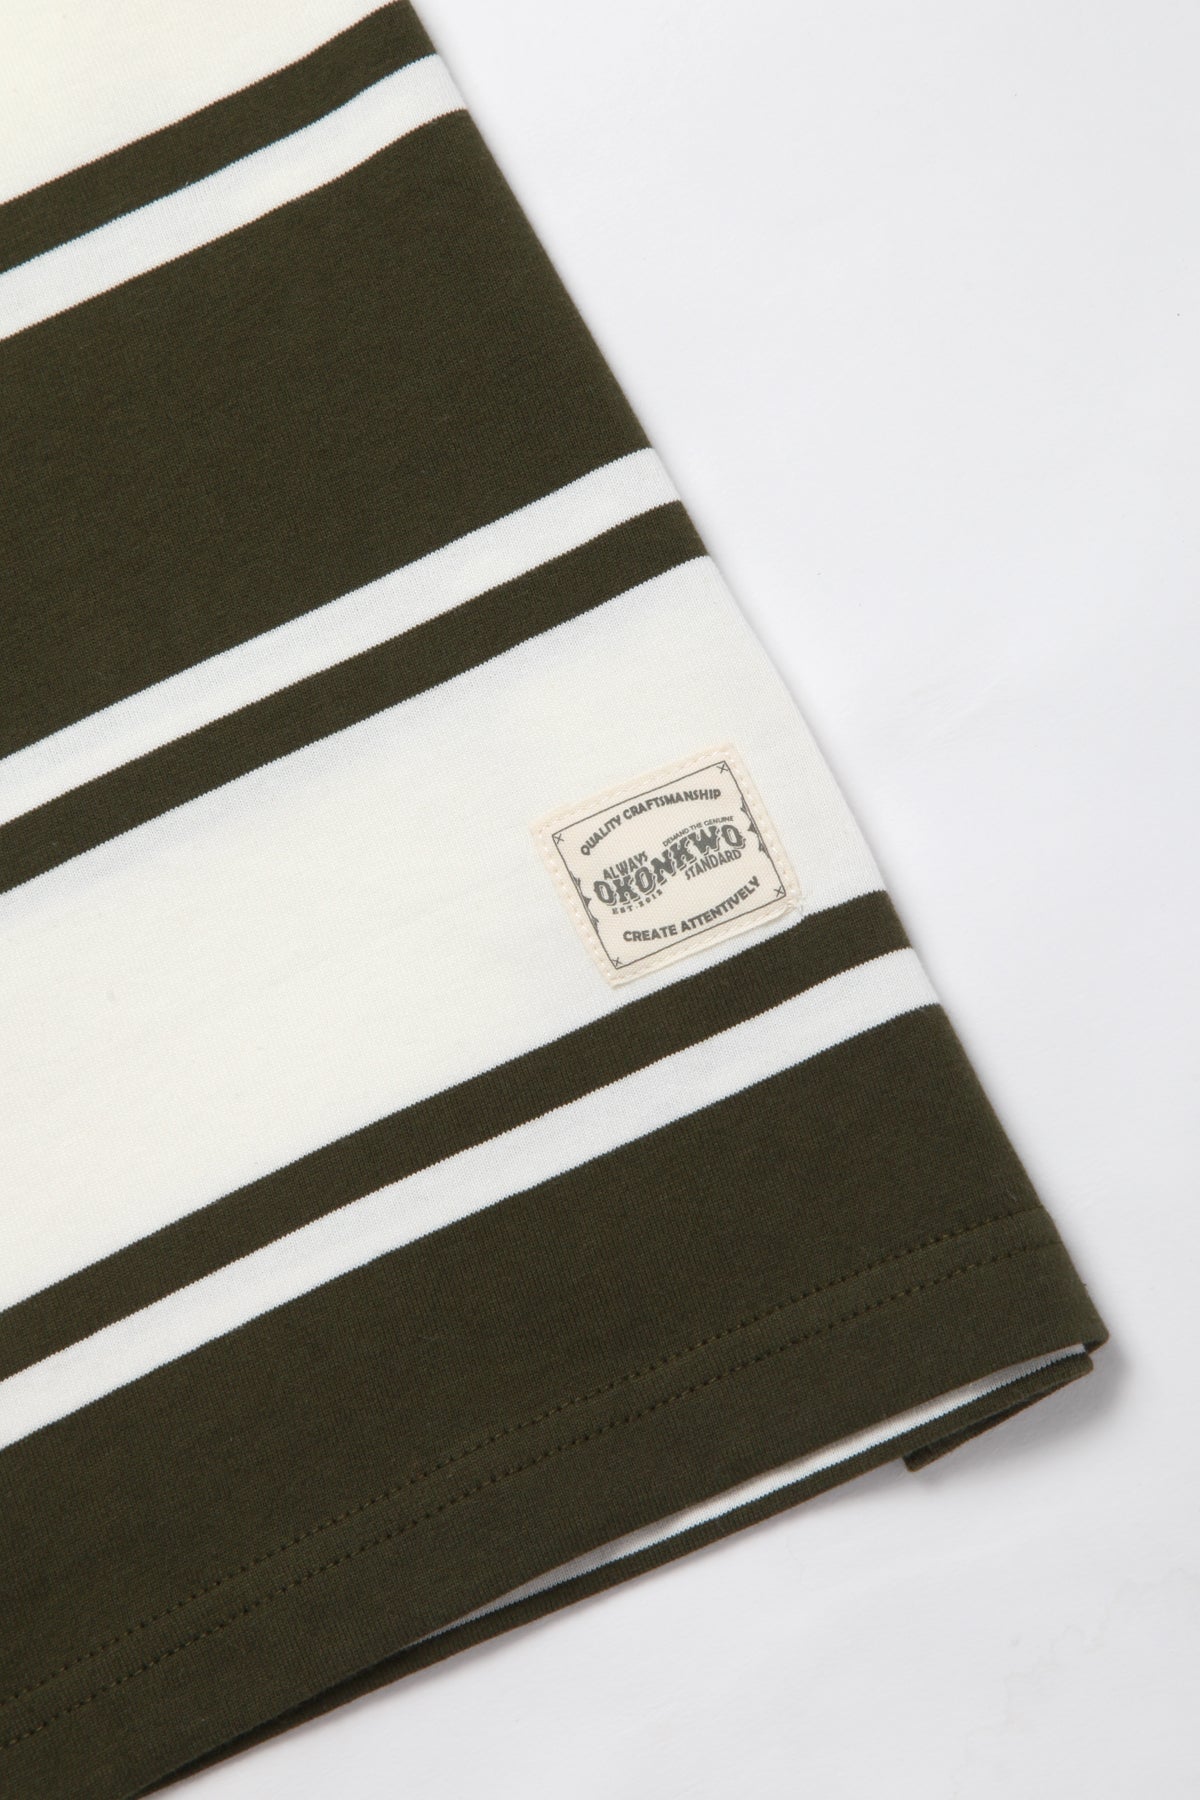 Okonkwo MFG - Short Sleeve Striped Tee - Olive/White